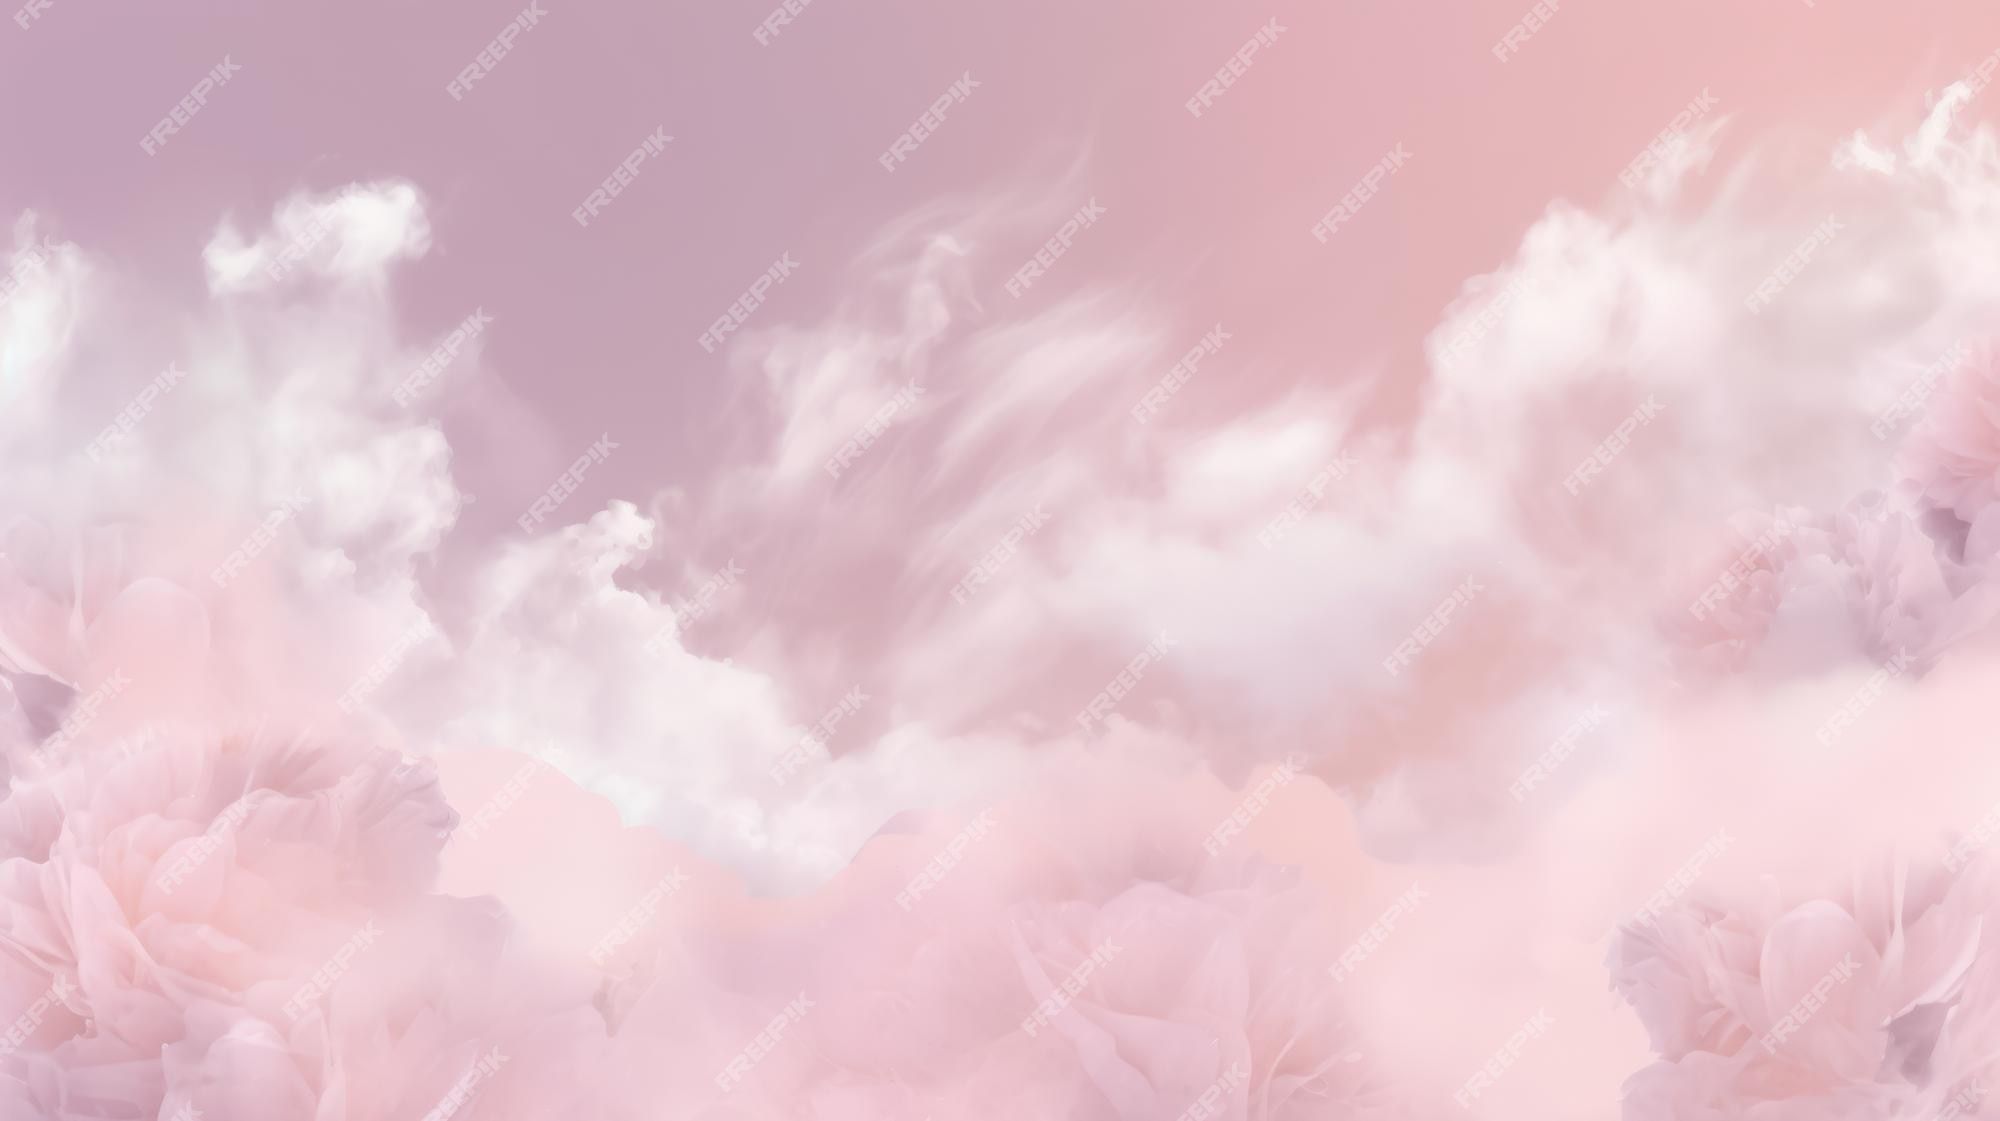 Aesthetic Desktop Wallpaper Pink Image